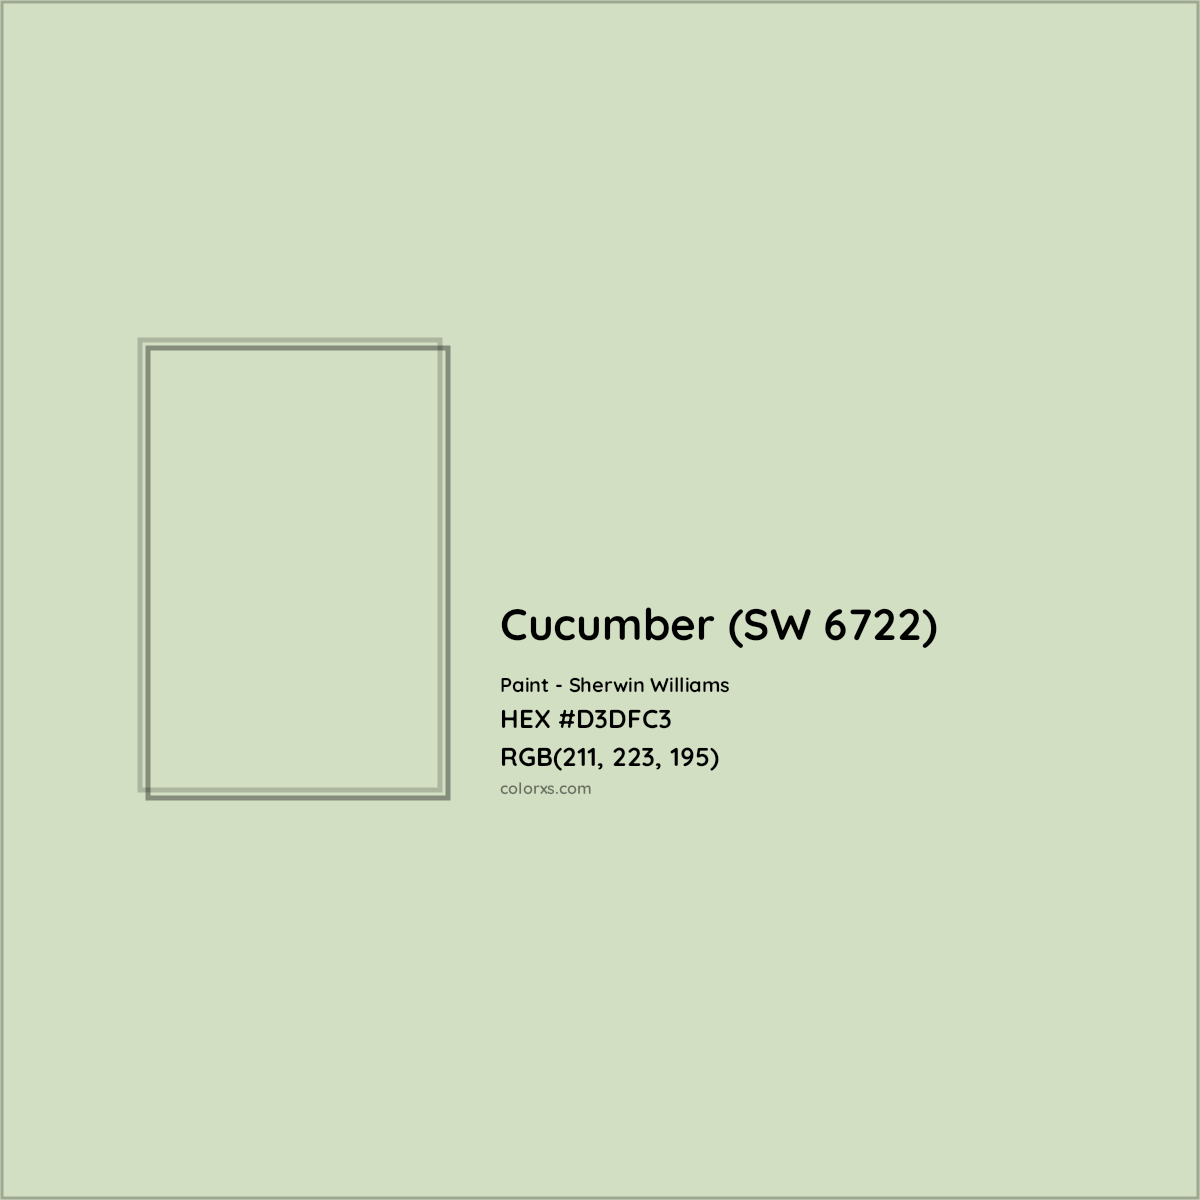 HEX #D3DFC3 Cucumber (SW 6722) Paint Sherwin Williams - Color Code